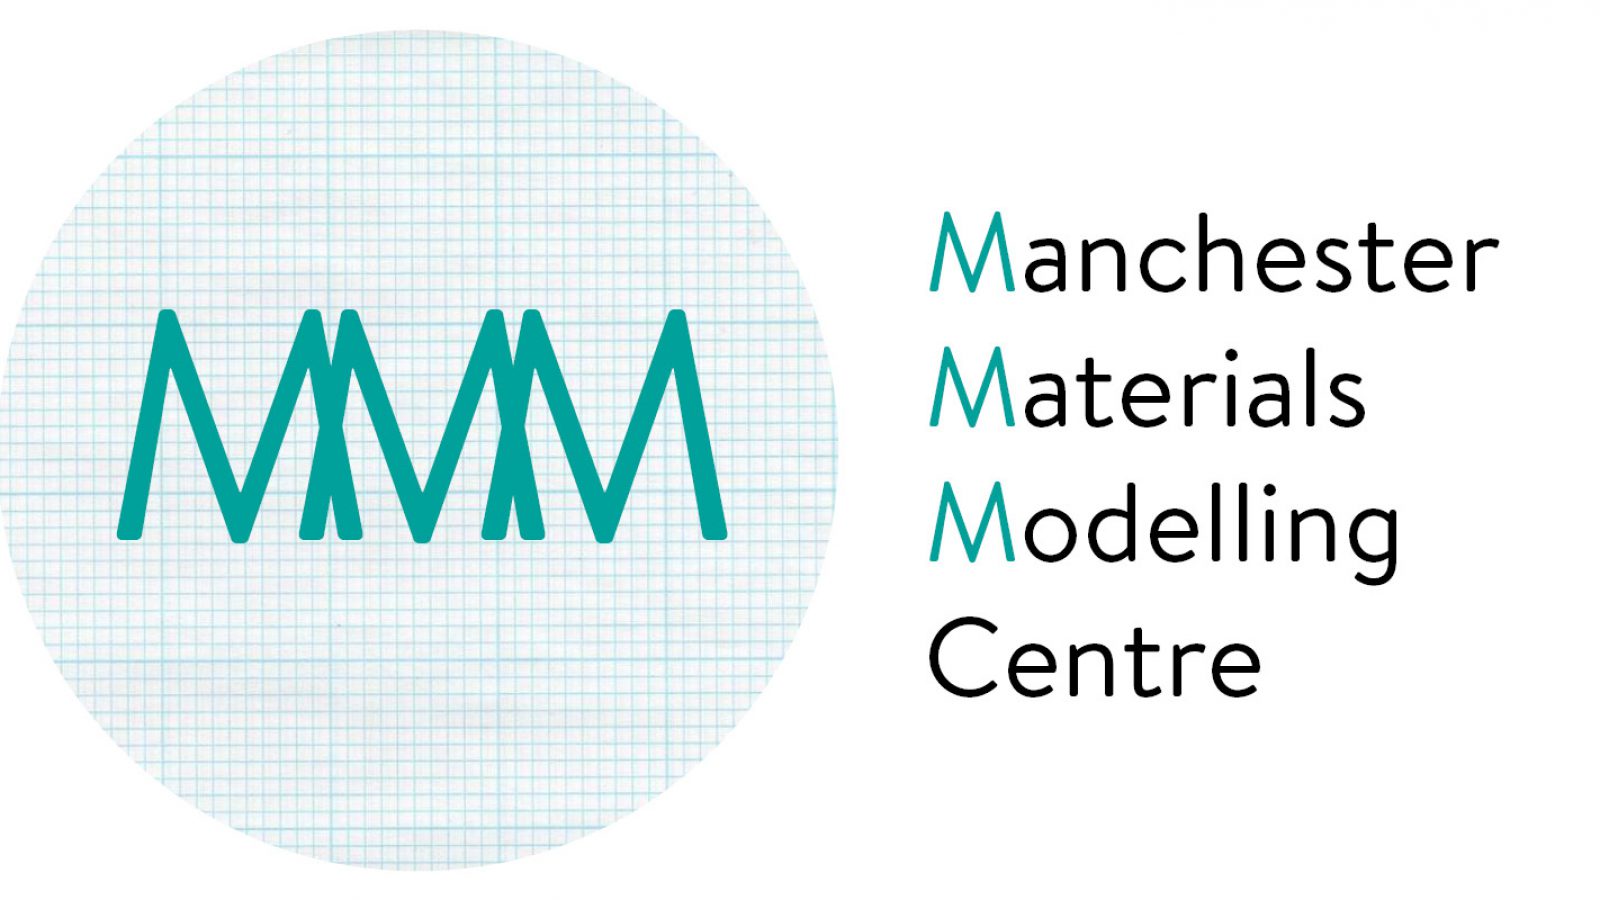 3MC logo